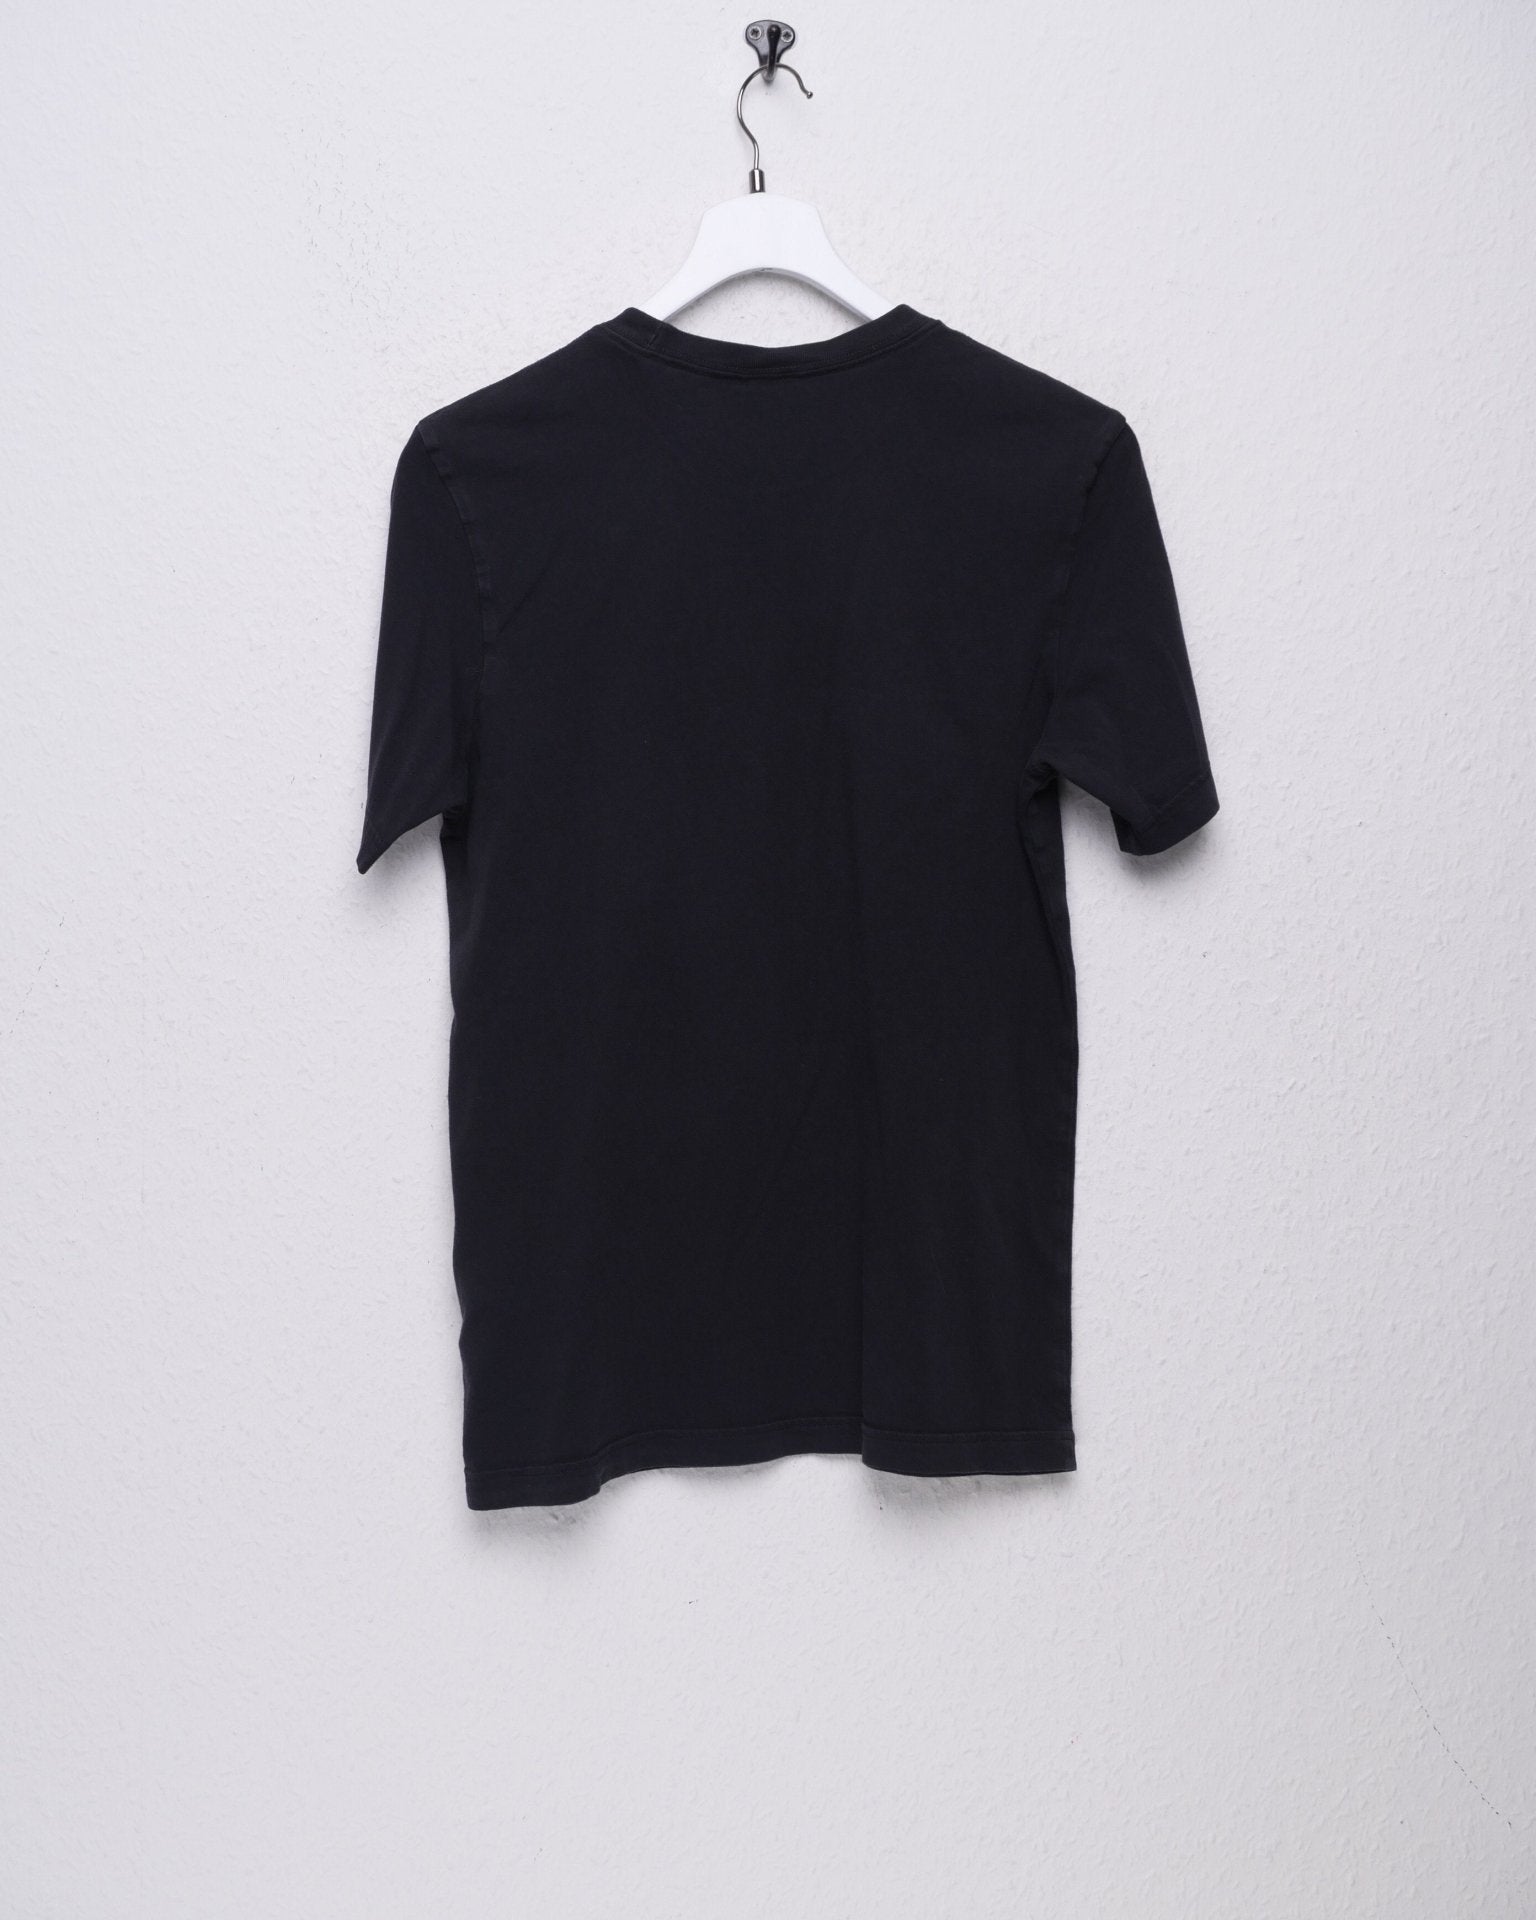 Adidas printed Logo black Shirt - Peeces